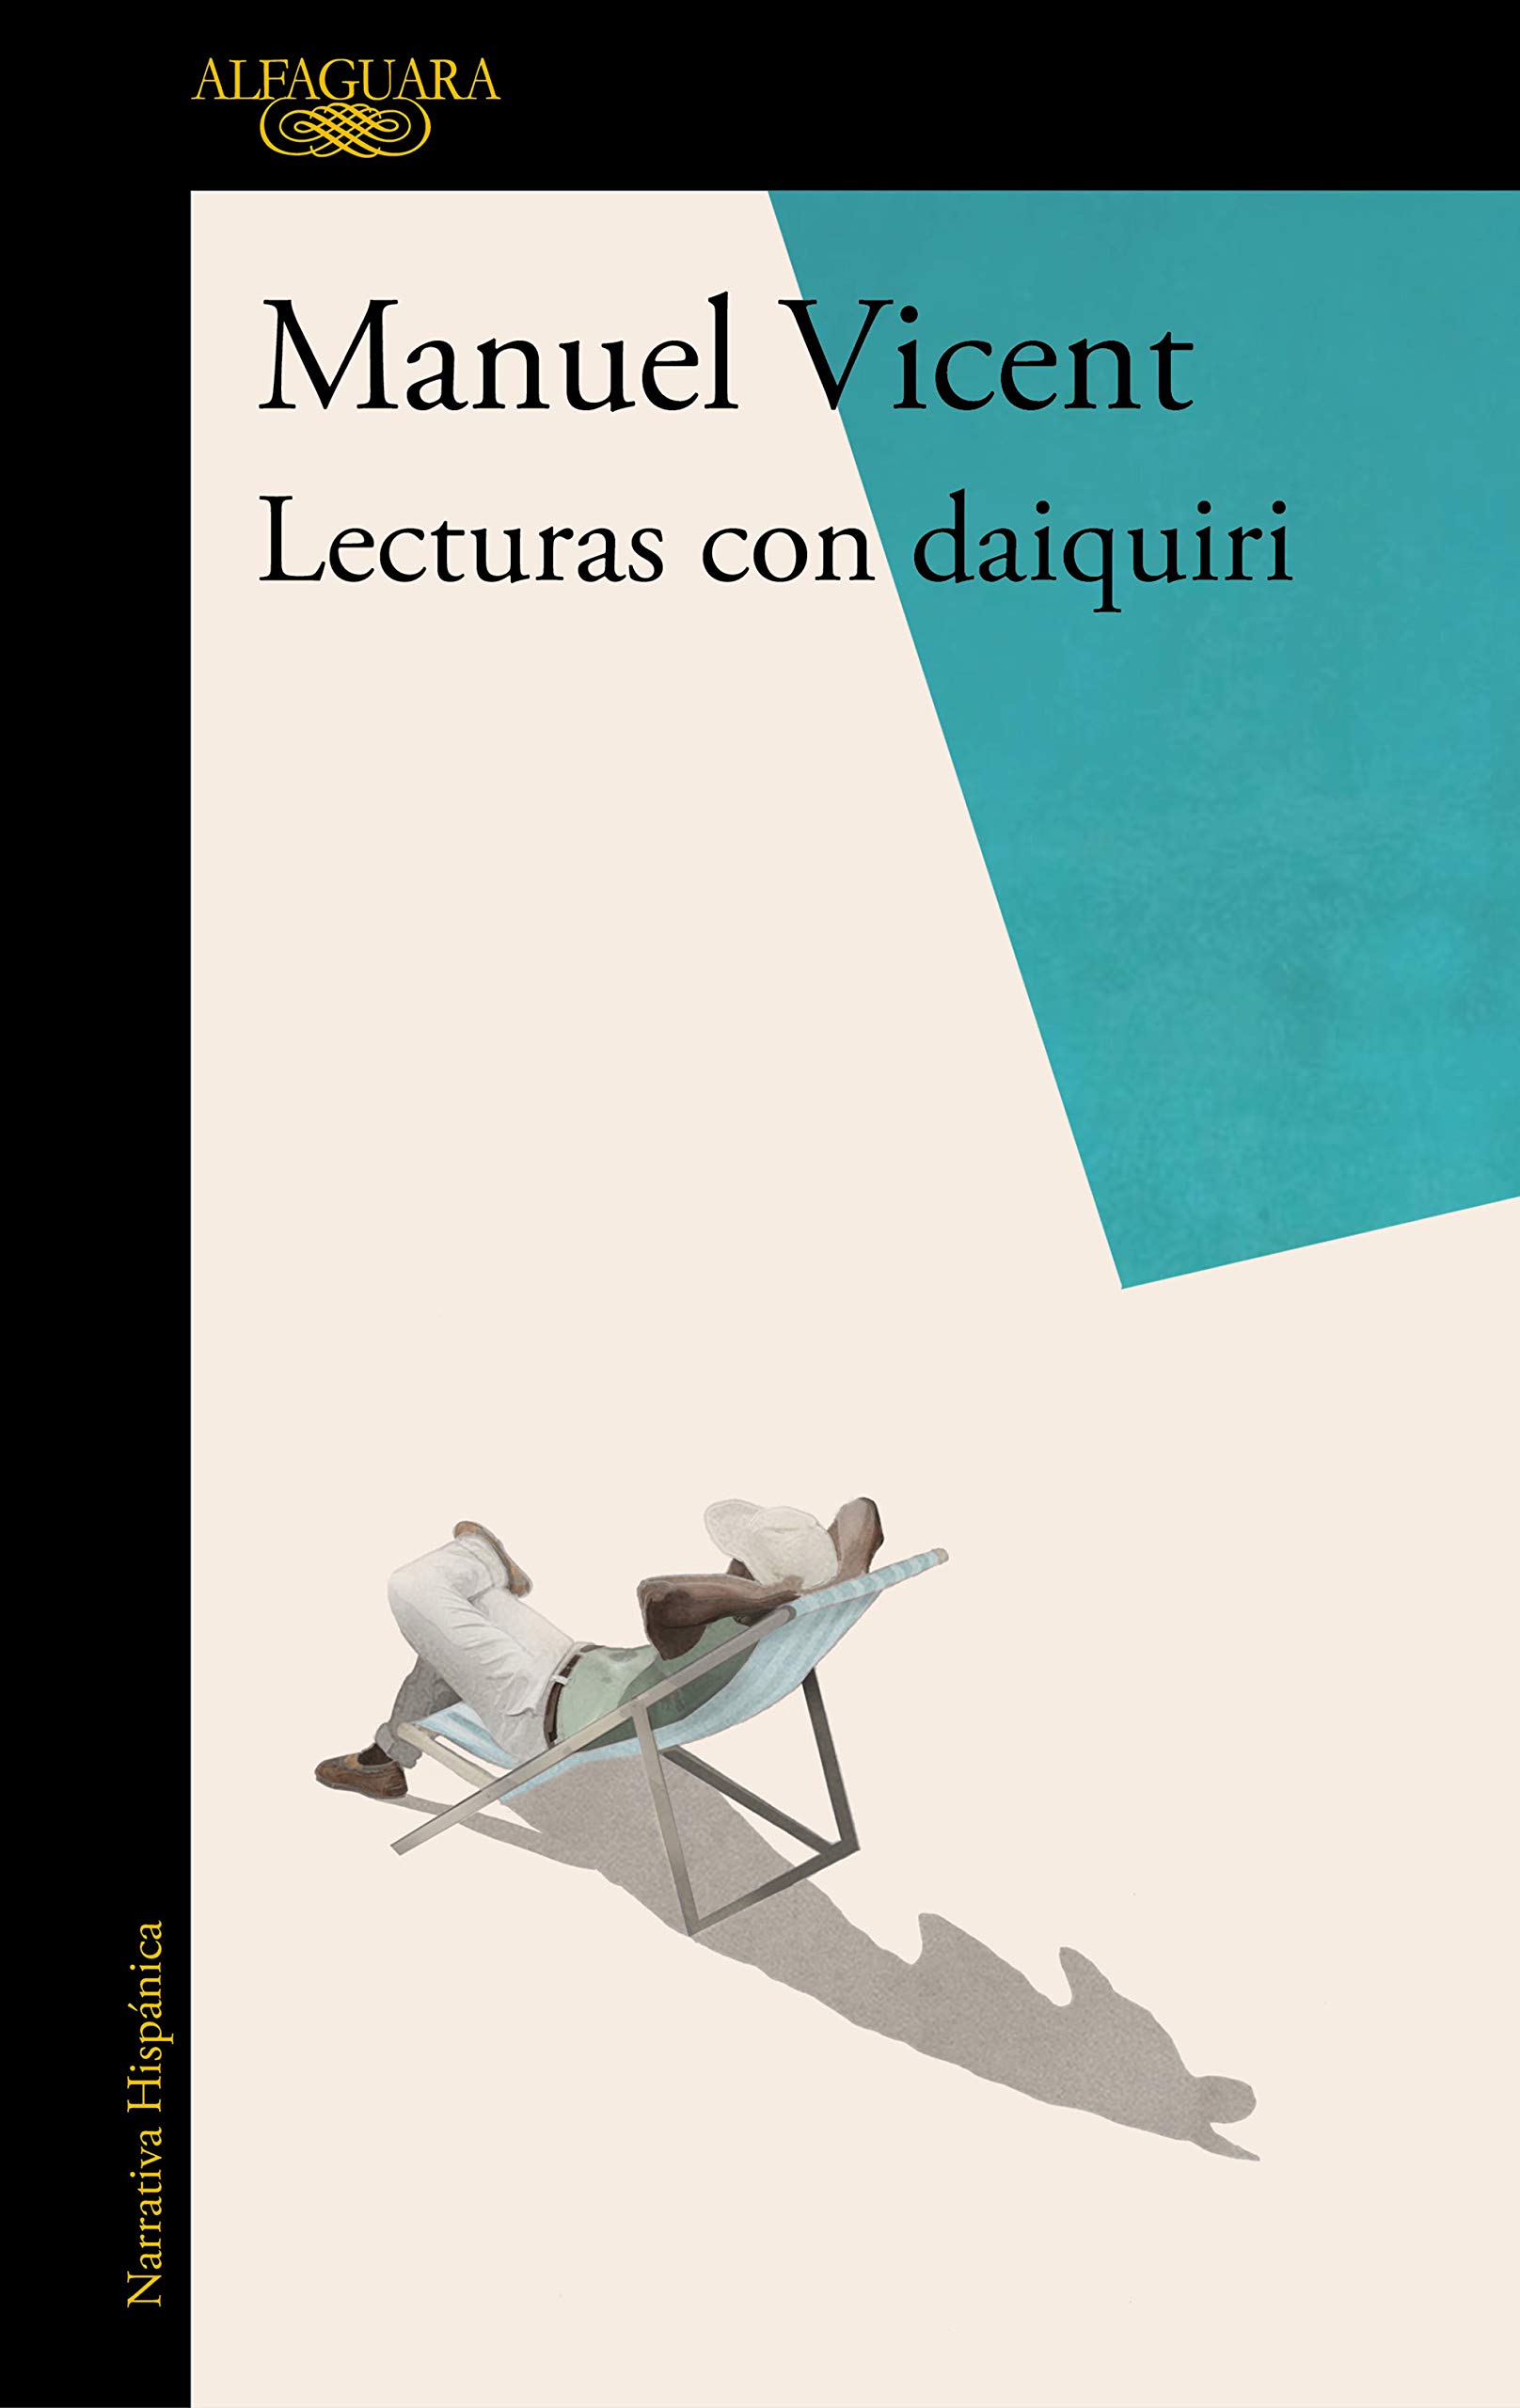 MANUEL VICENT. Lecturas con Daiquiri (Alfaguara)